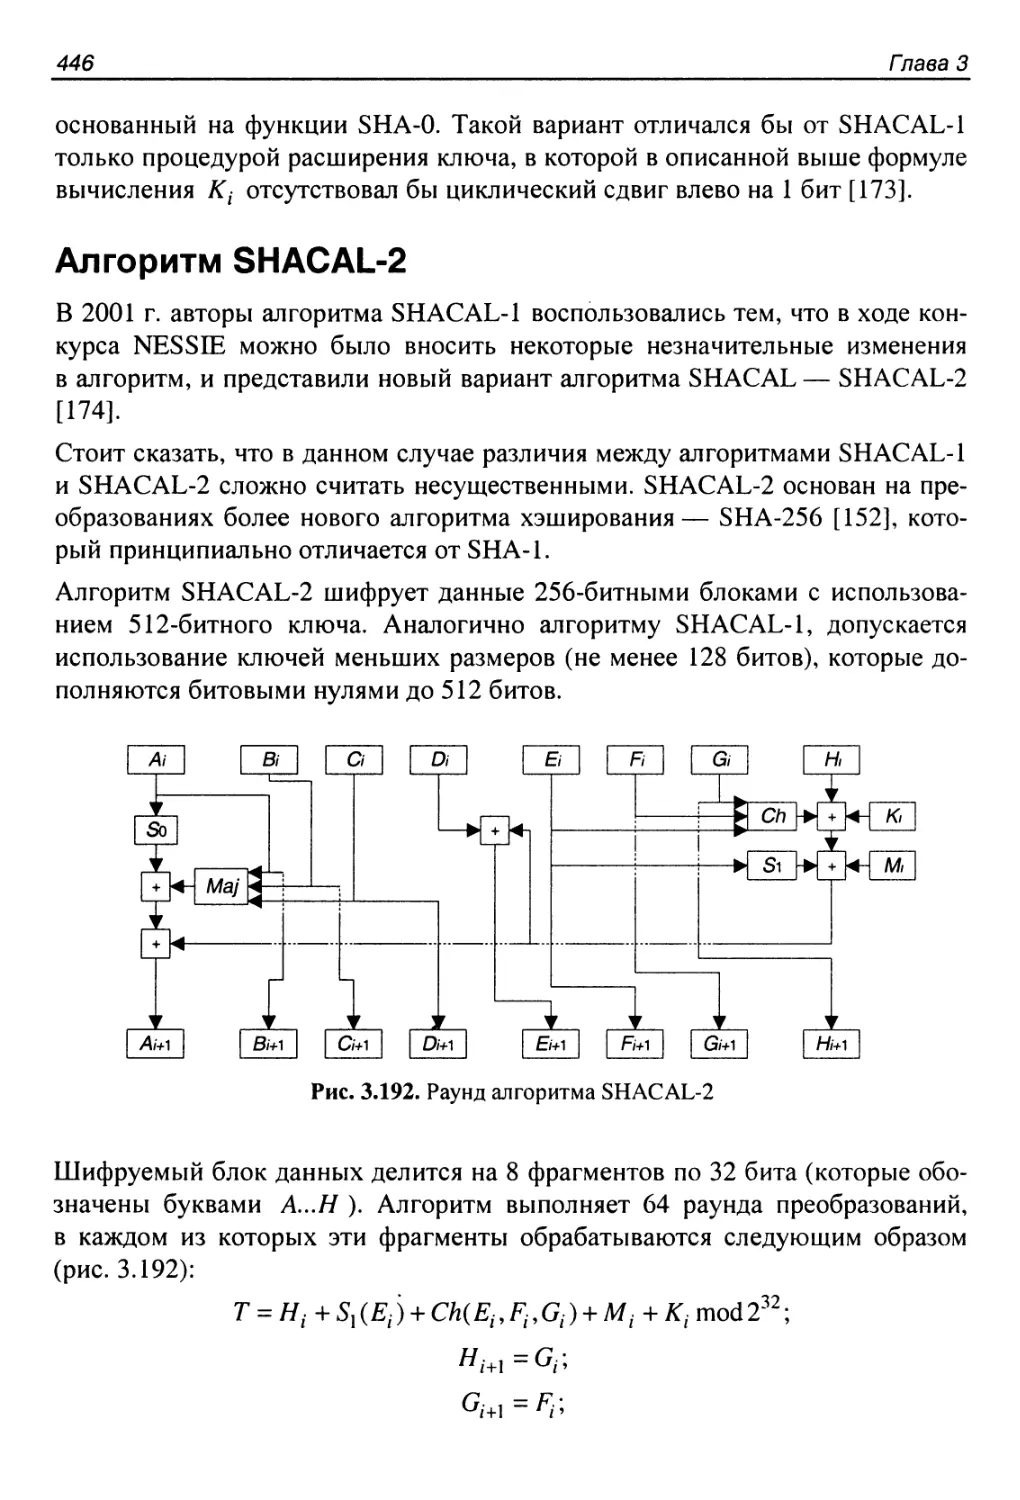 Алгоритм SHACAL-2